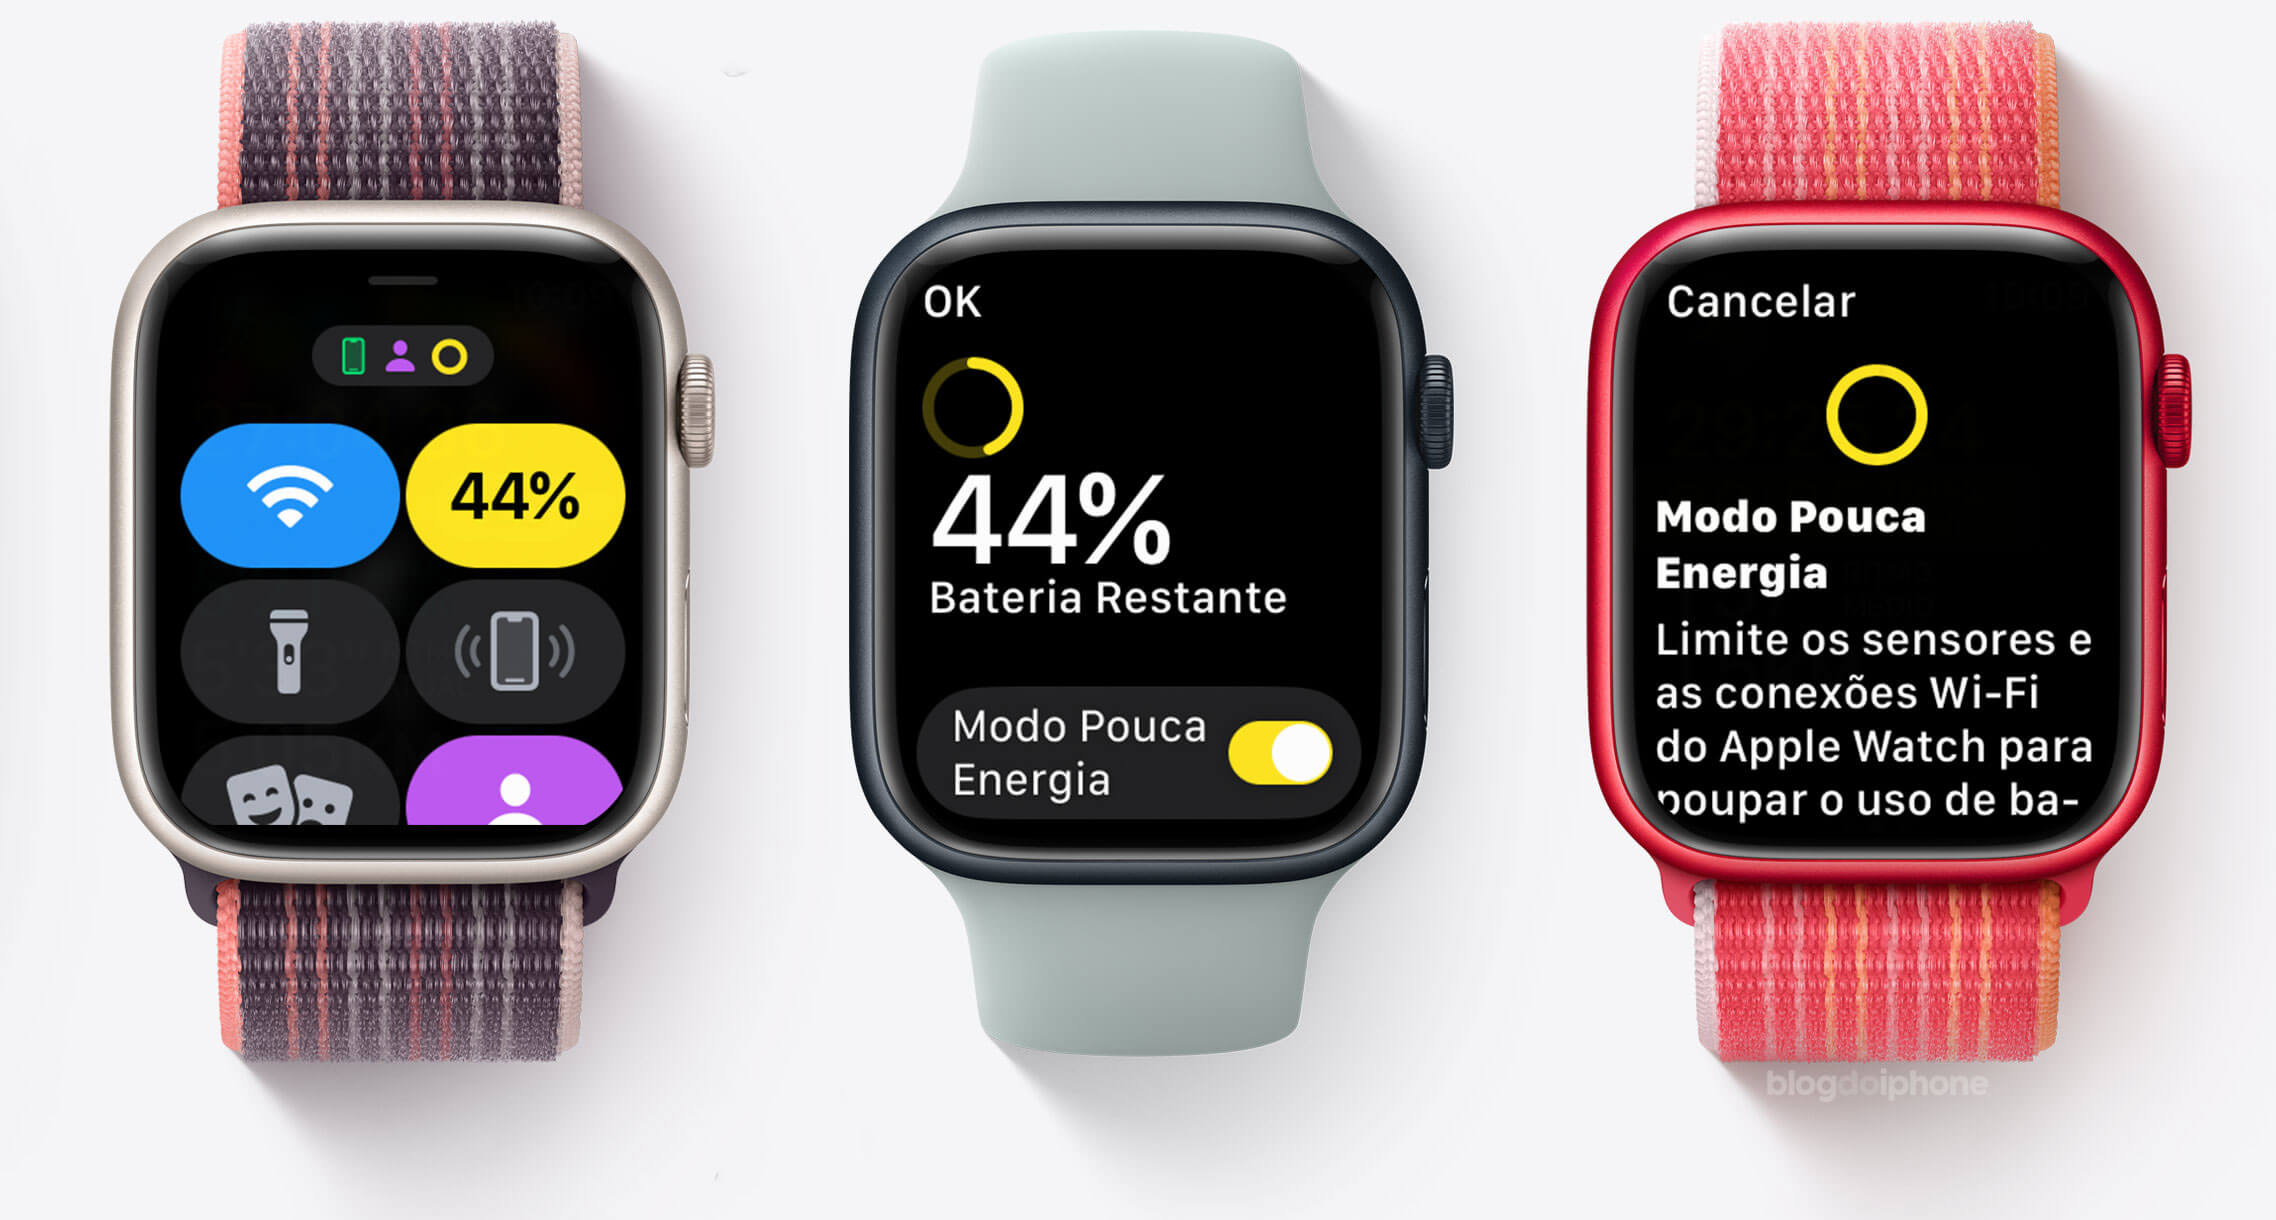 Apple Watch modo pouca energia